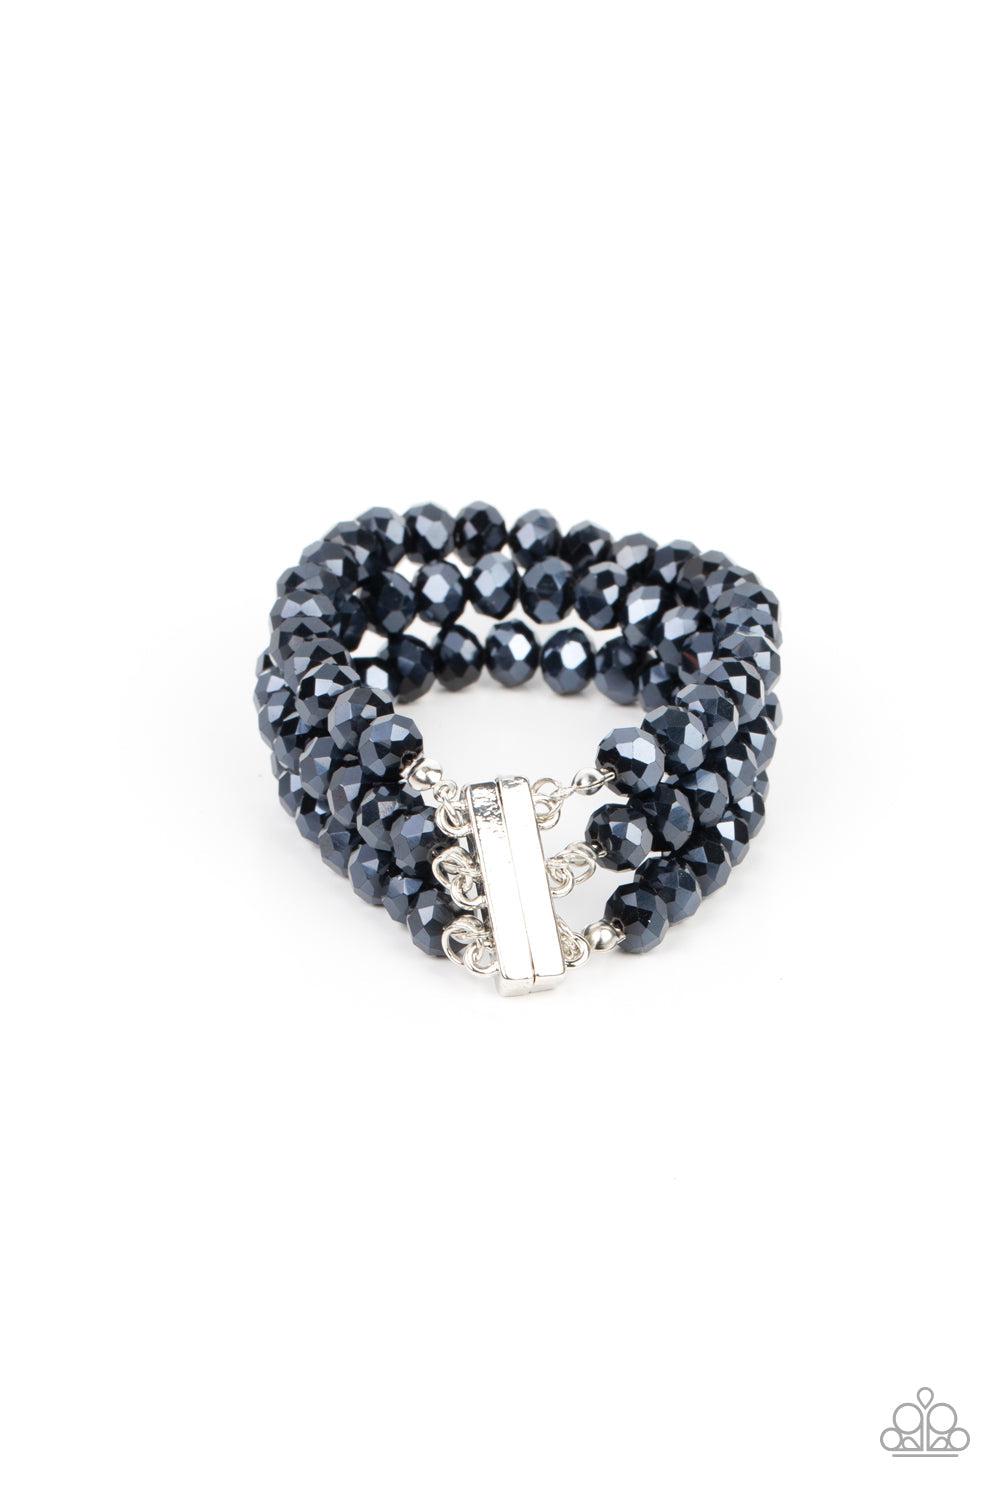 Supernova Sultry Blue Bracelet - Paparazzi Accessories- lightbox - CarasShop.com - $5 Jewelry by Cara Jewels